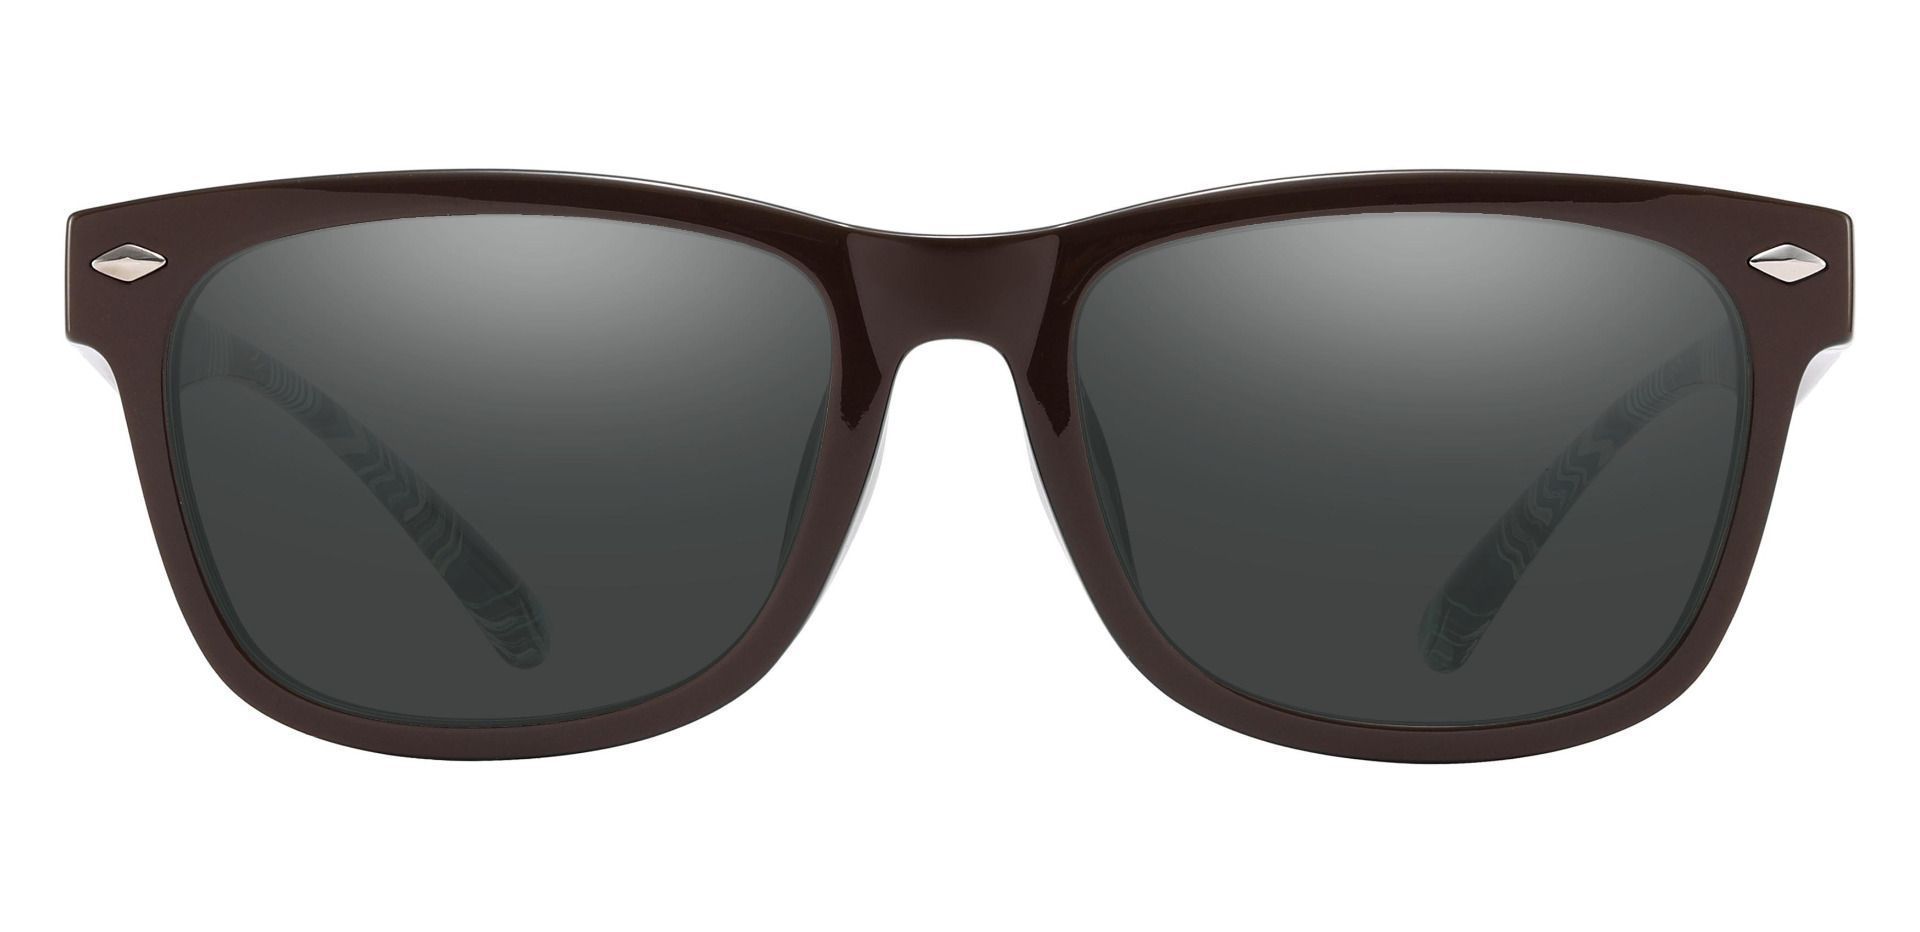 Shaler Square Progressive Sunglasses - Brown Frame With Gray Lenses